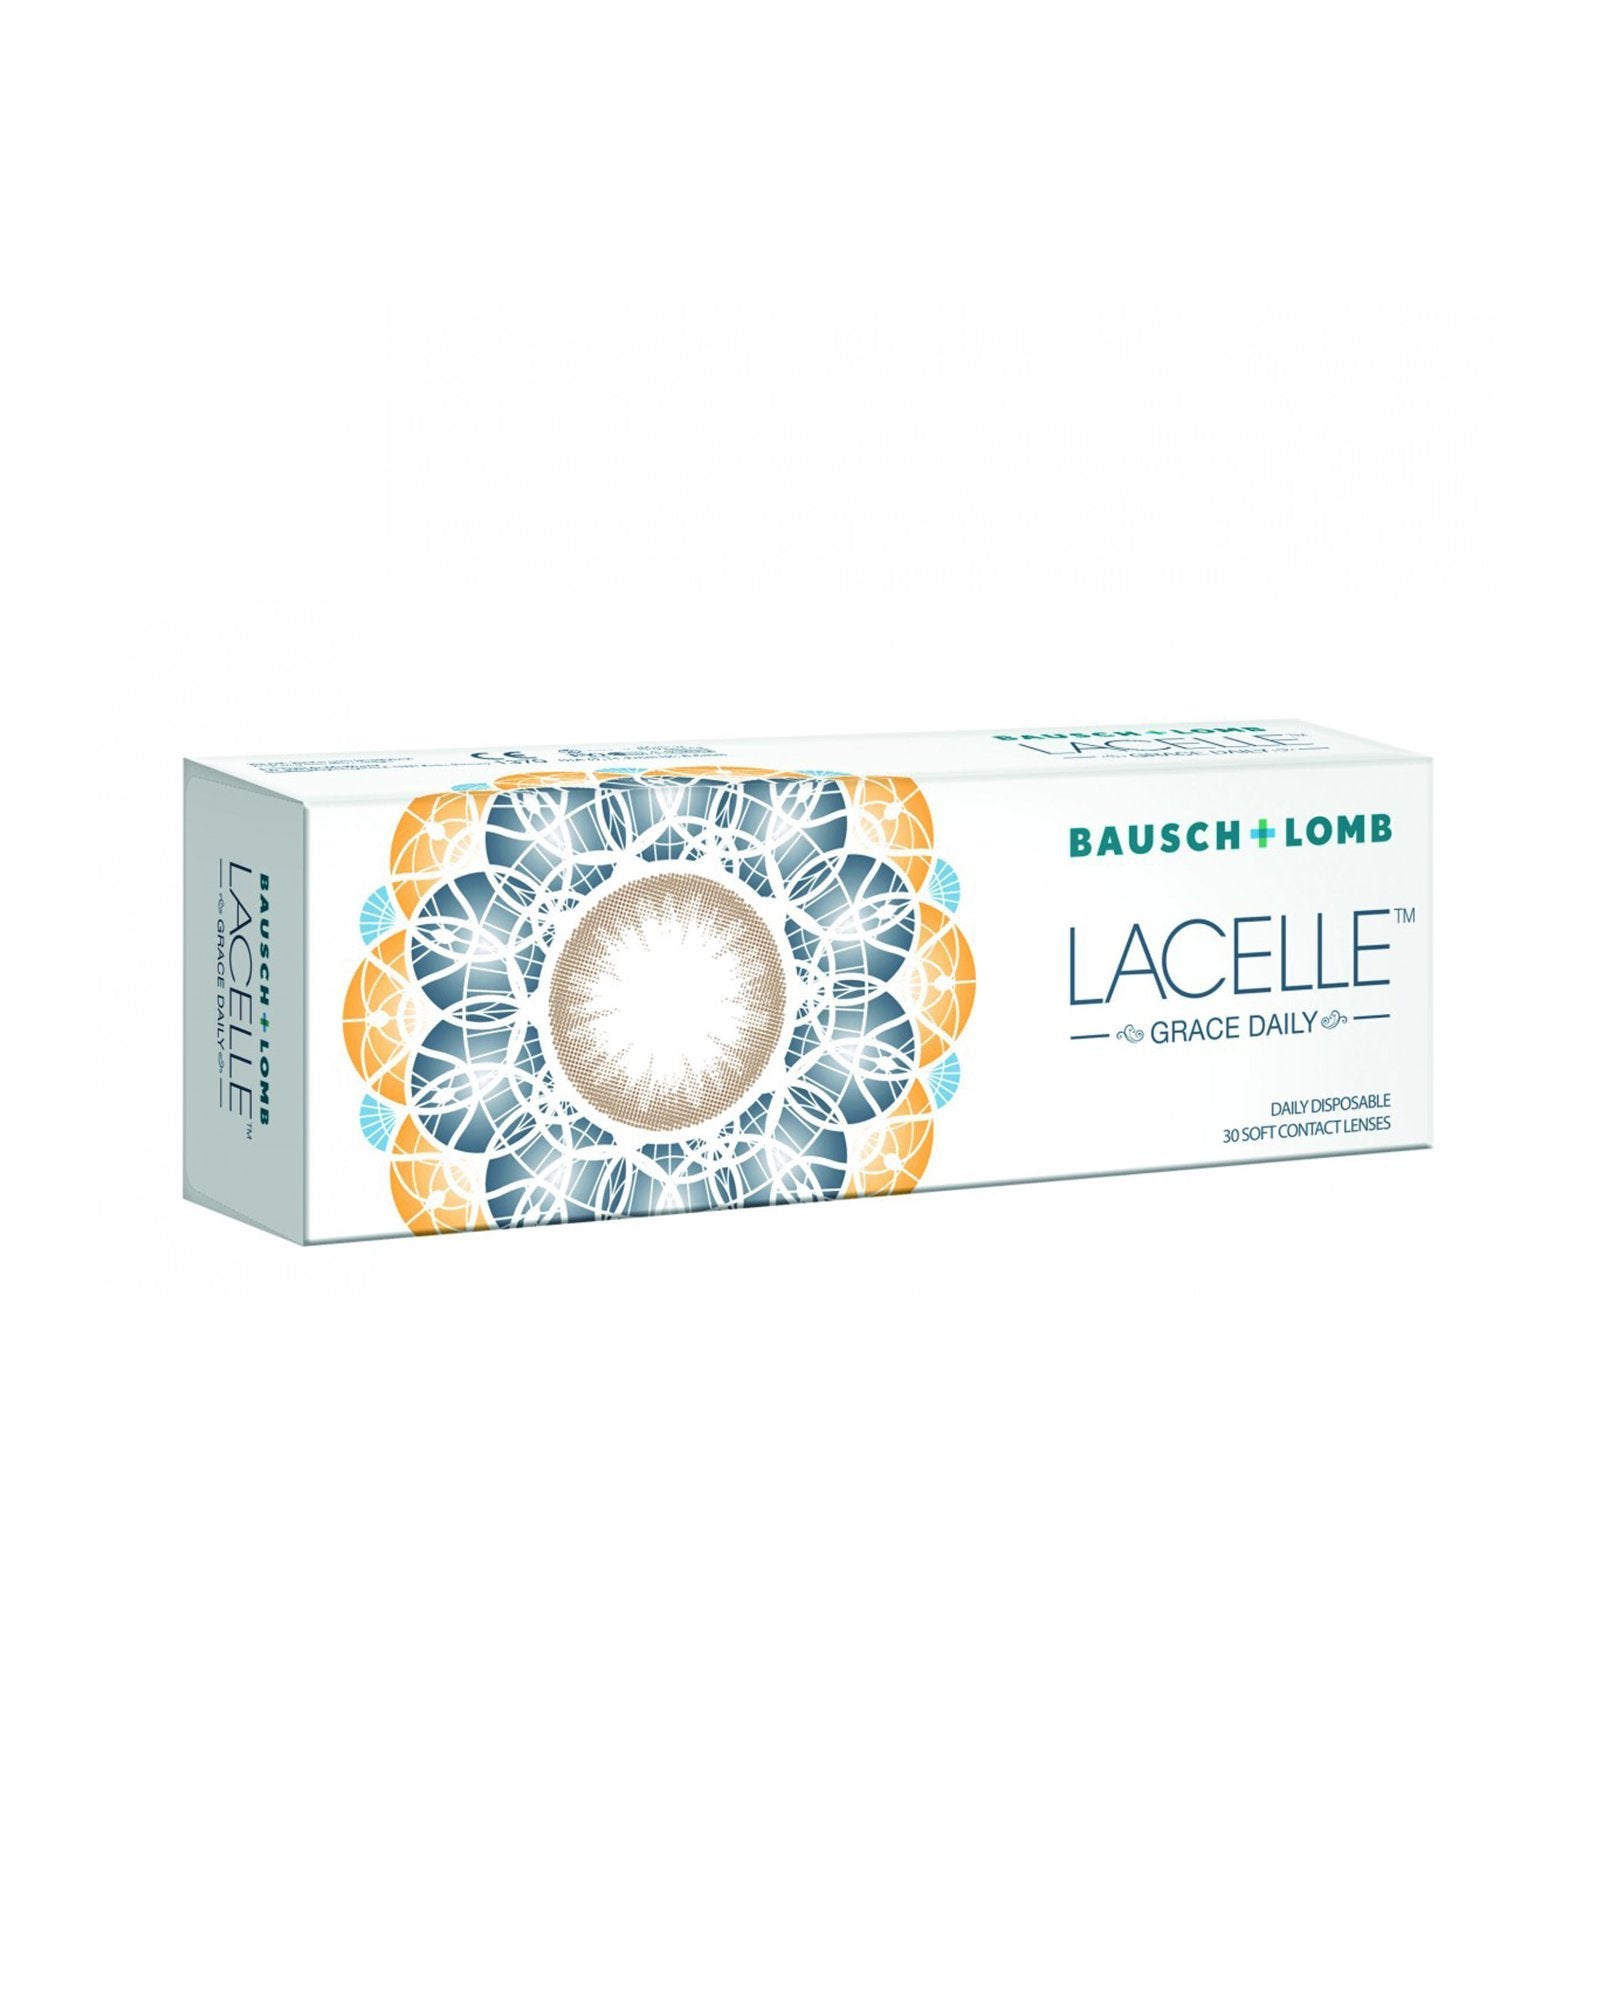 Lacelle™ Grace Daily - BAUSCH+LOMB - lenscottage